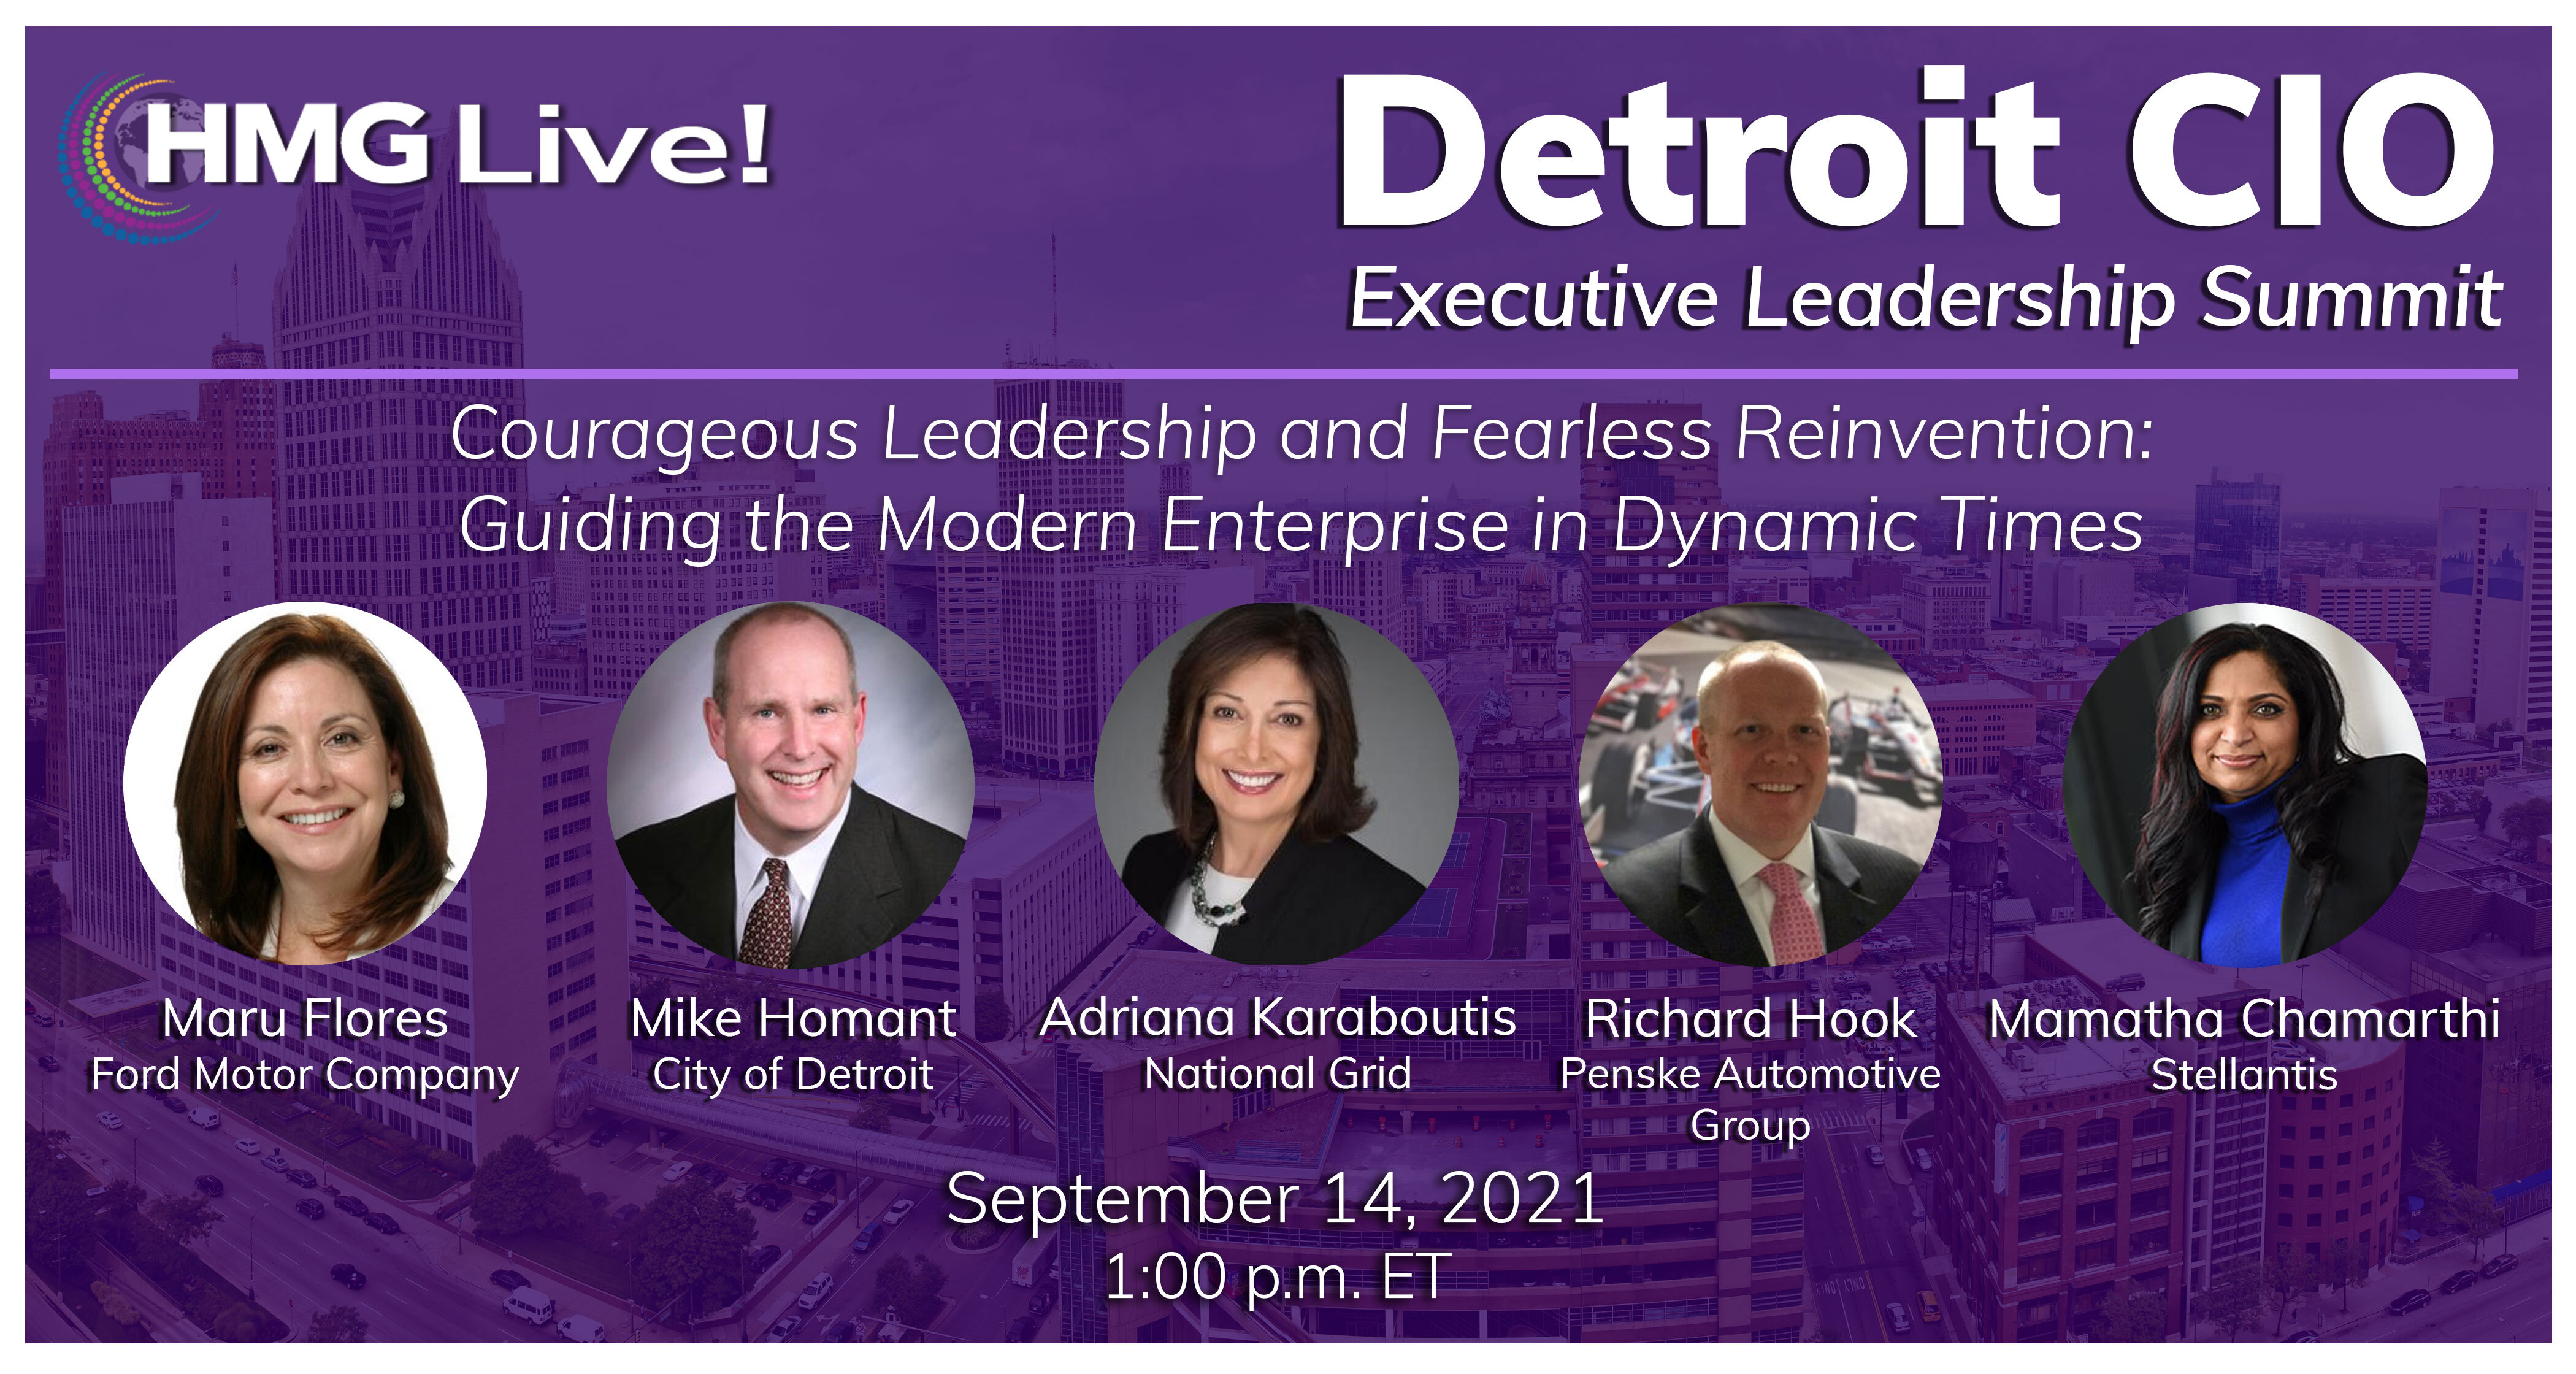 The 2021 HMG Live! Detroit CIO Executive Leadership Summit